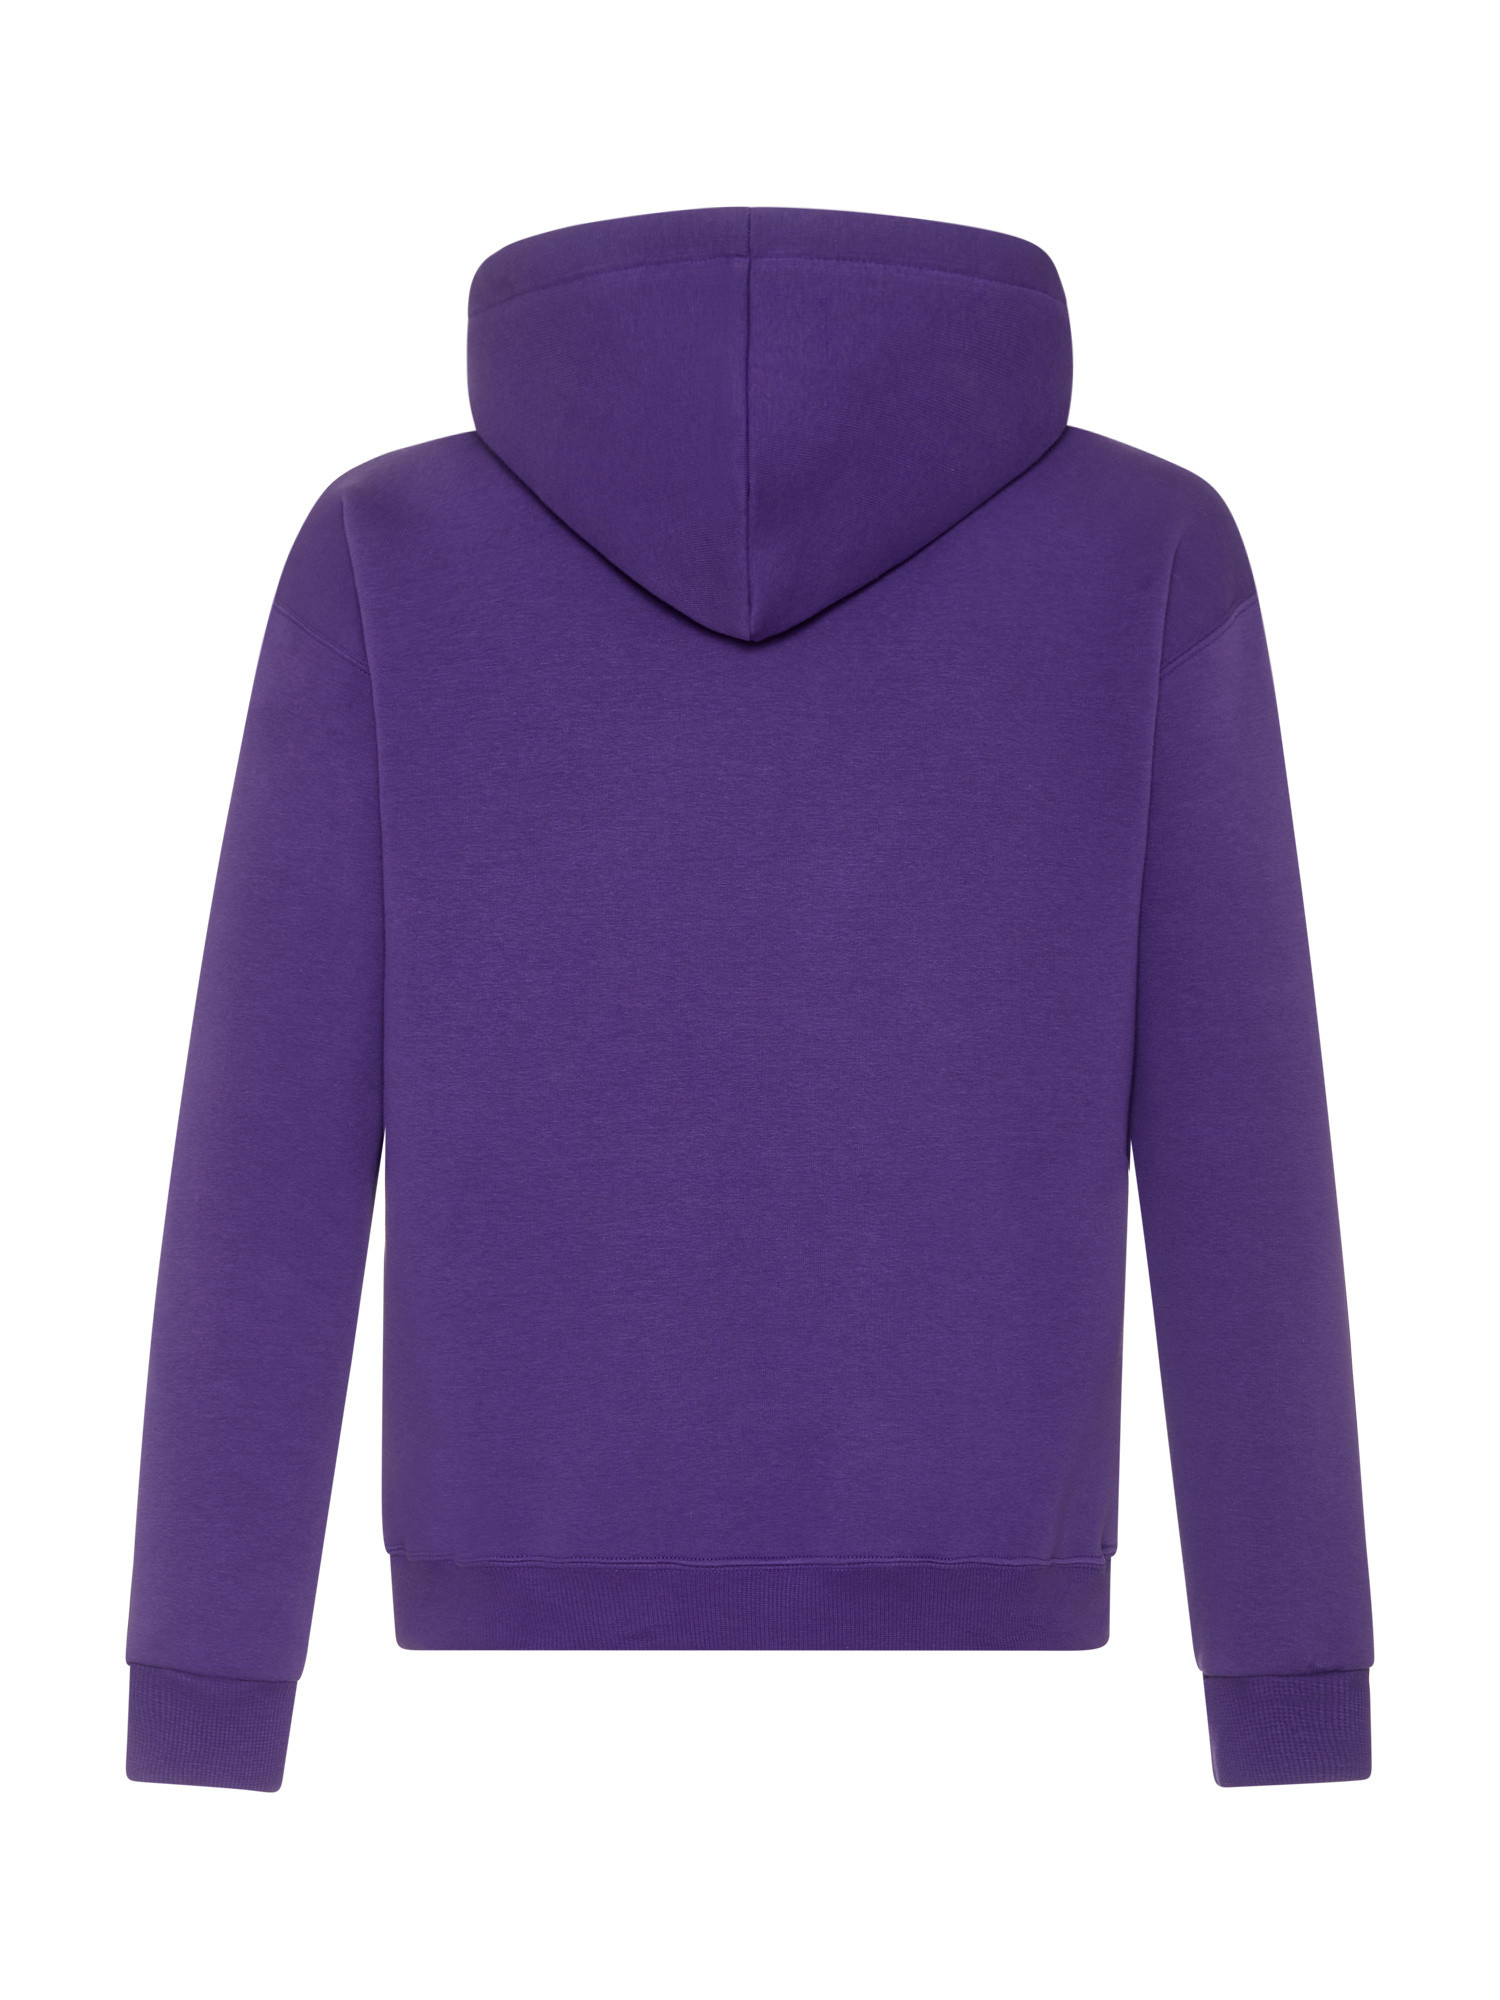 Usual - Barrio Hooded Sweatshirt, Purple, large image number 1